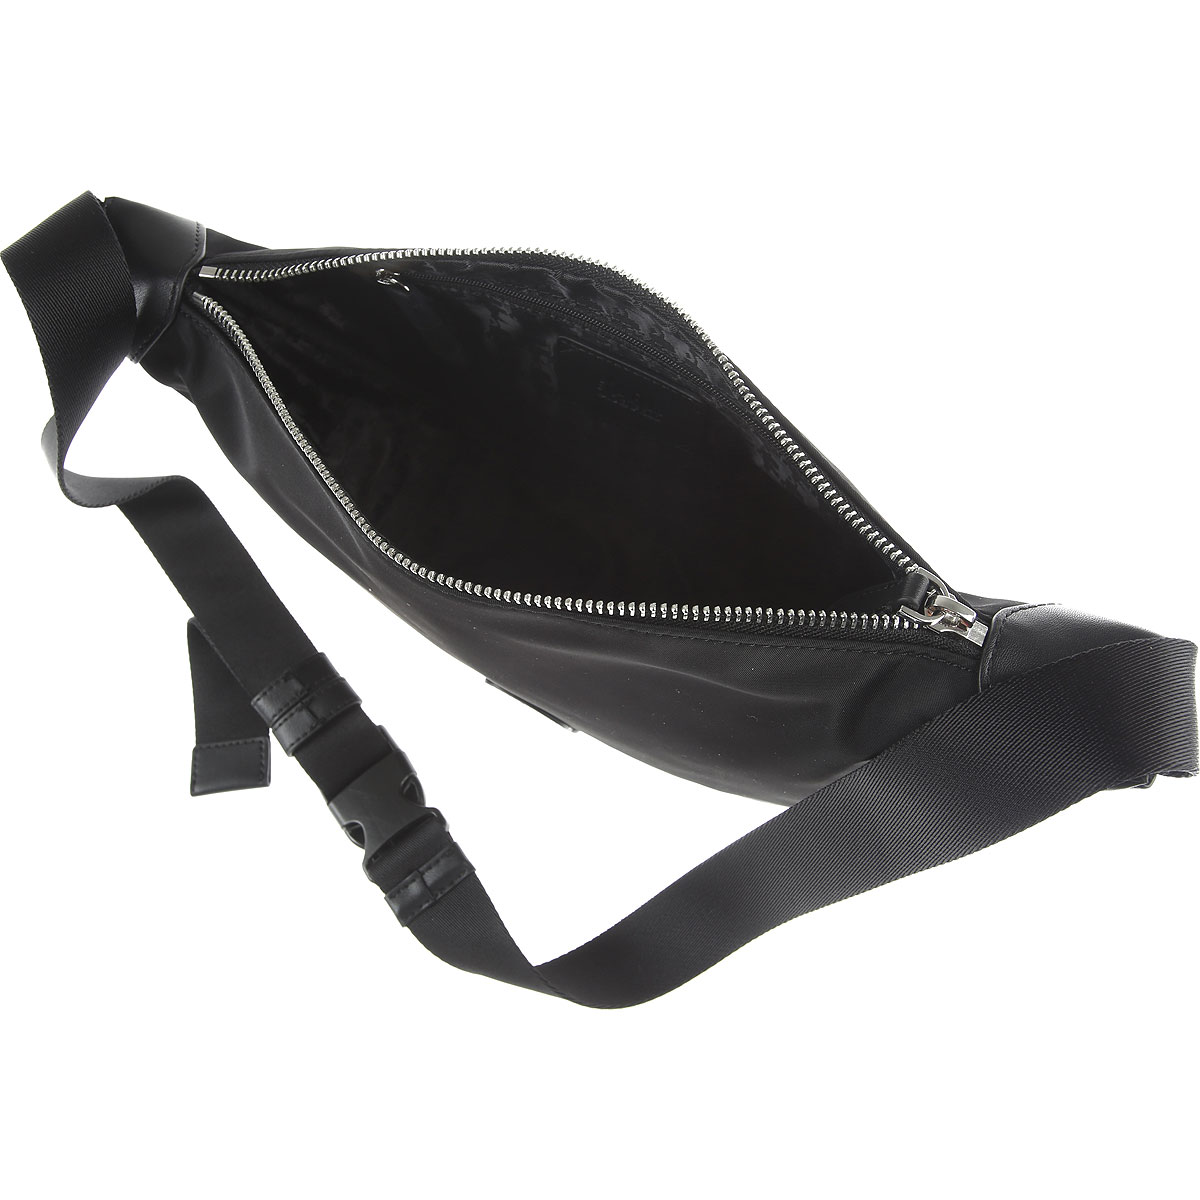 Handbags Karl Lagerfeld, Style code: 220w3029-a999